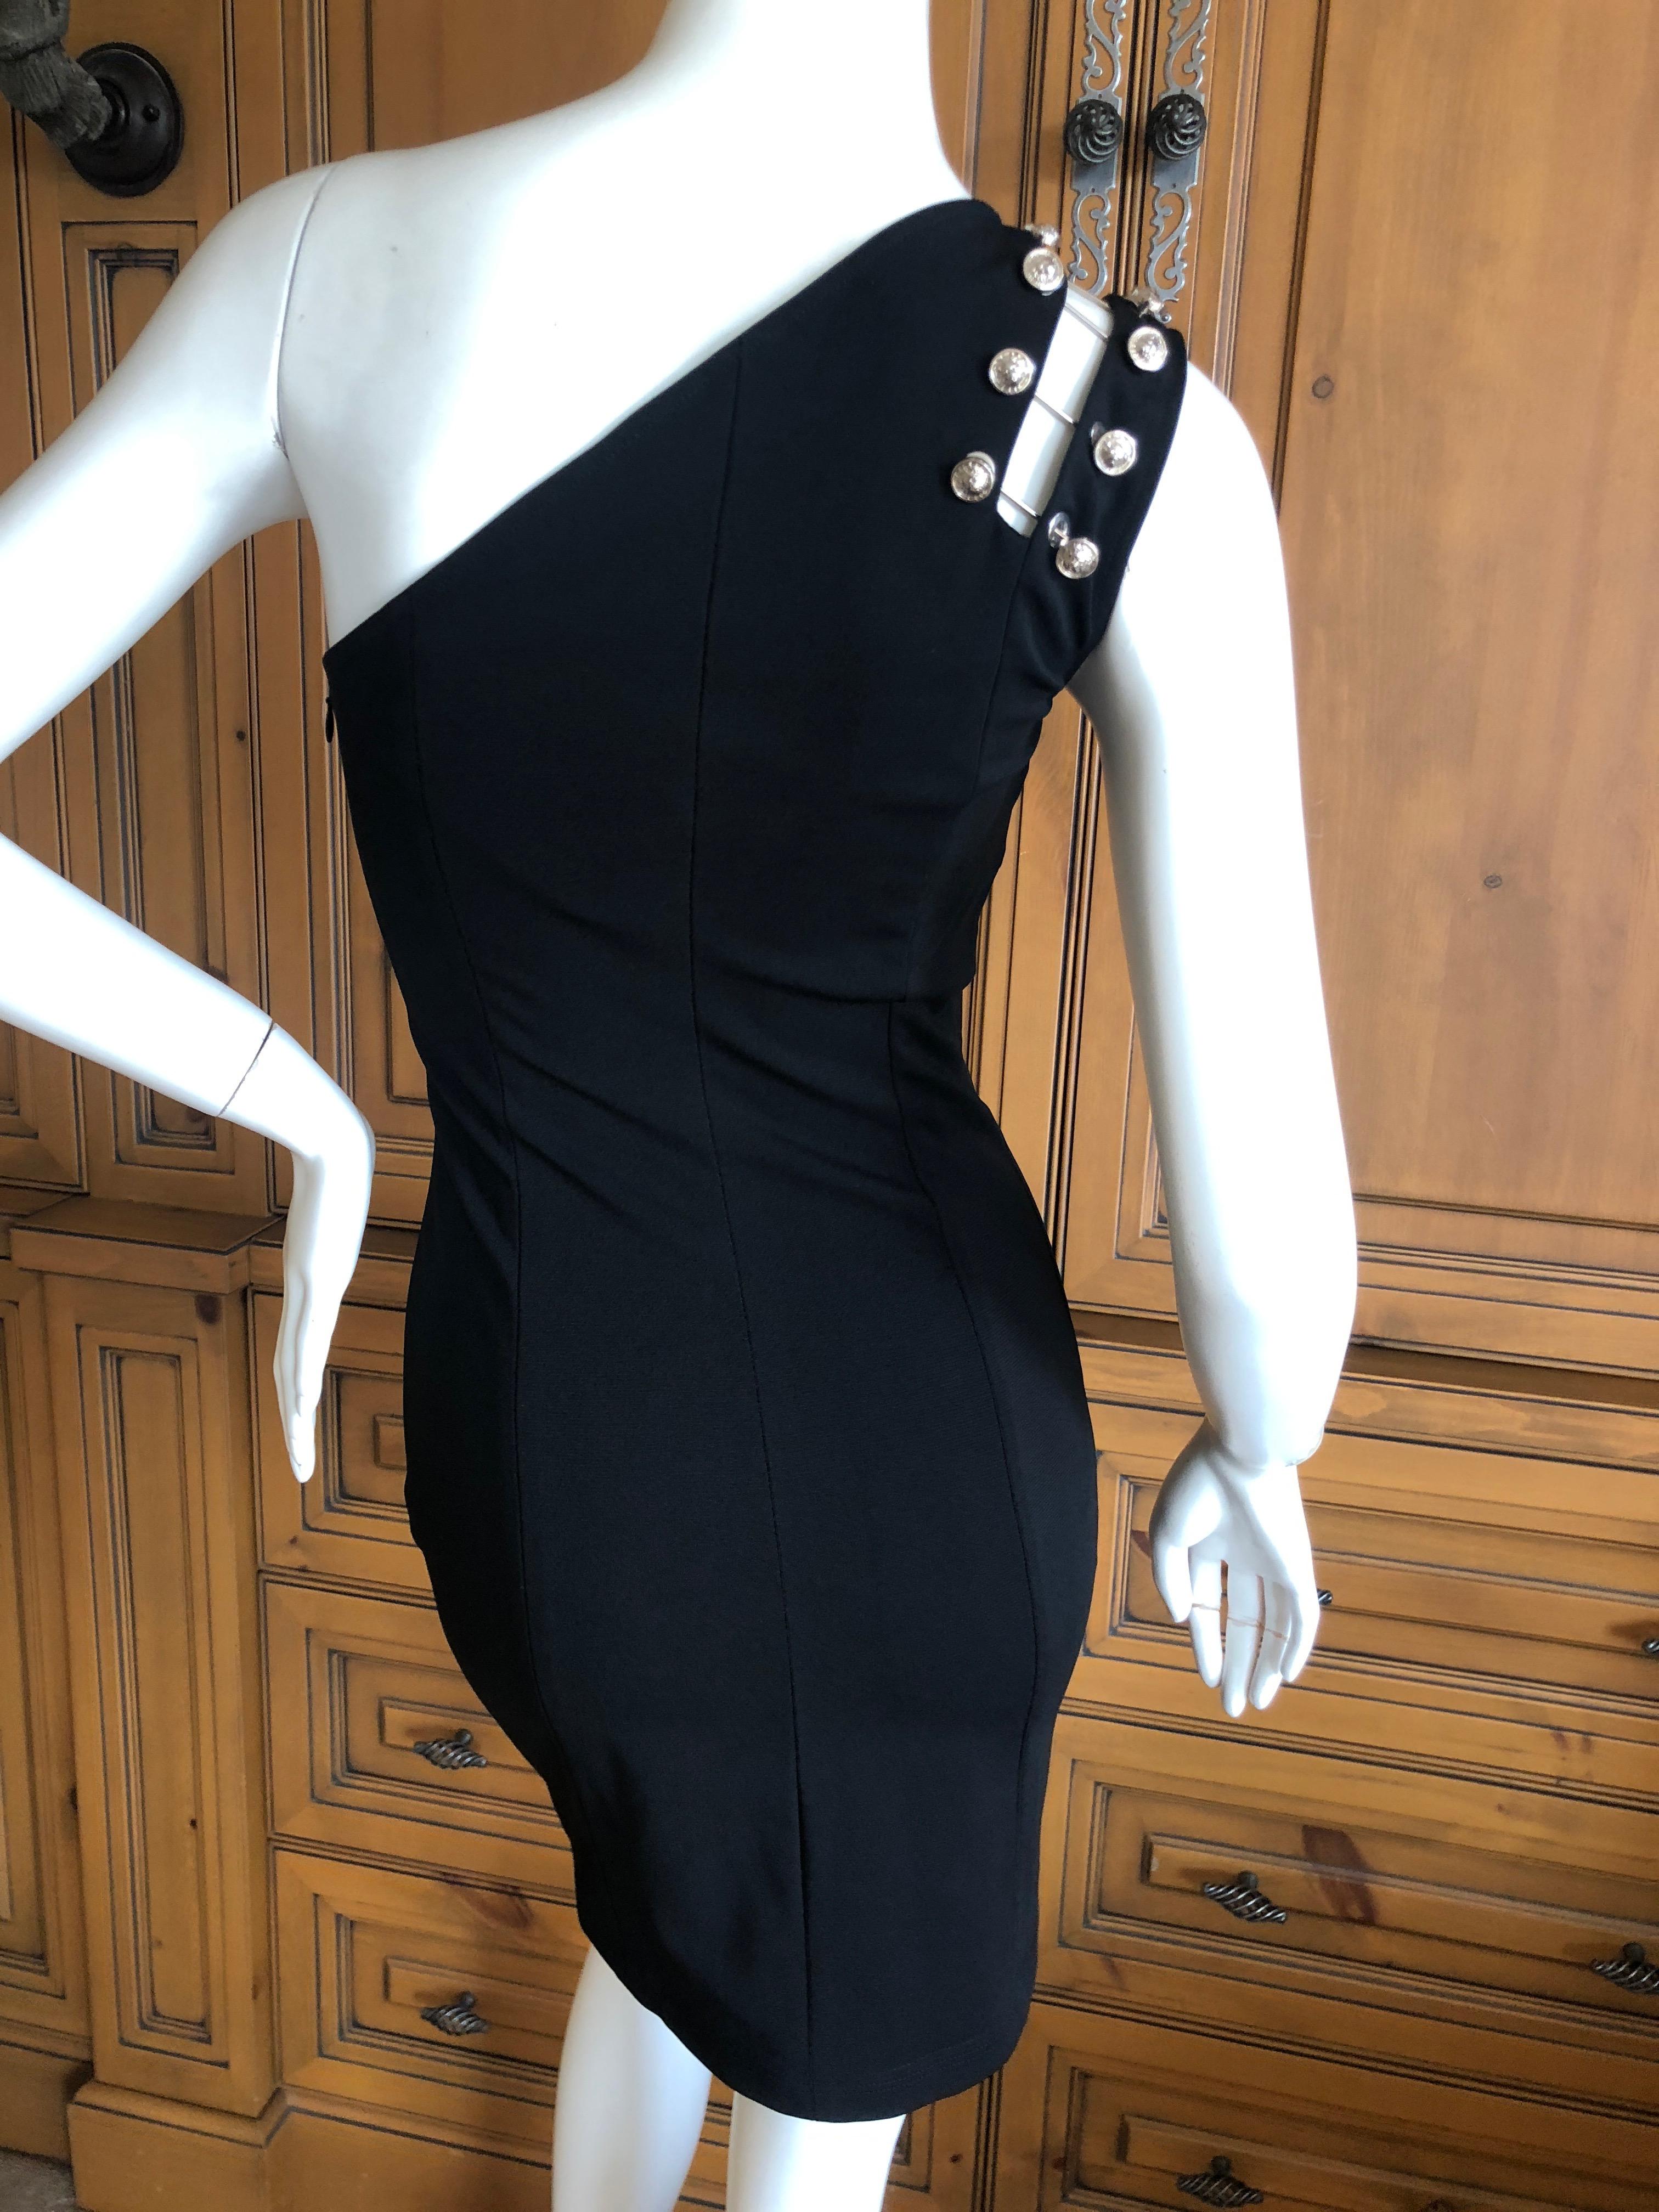 Versus by Versace Black Stretch Cocktail Dress with Shoulder Embellishment  For Sale 1